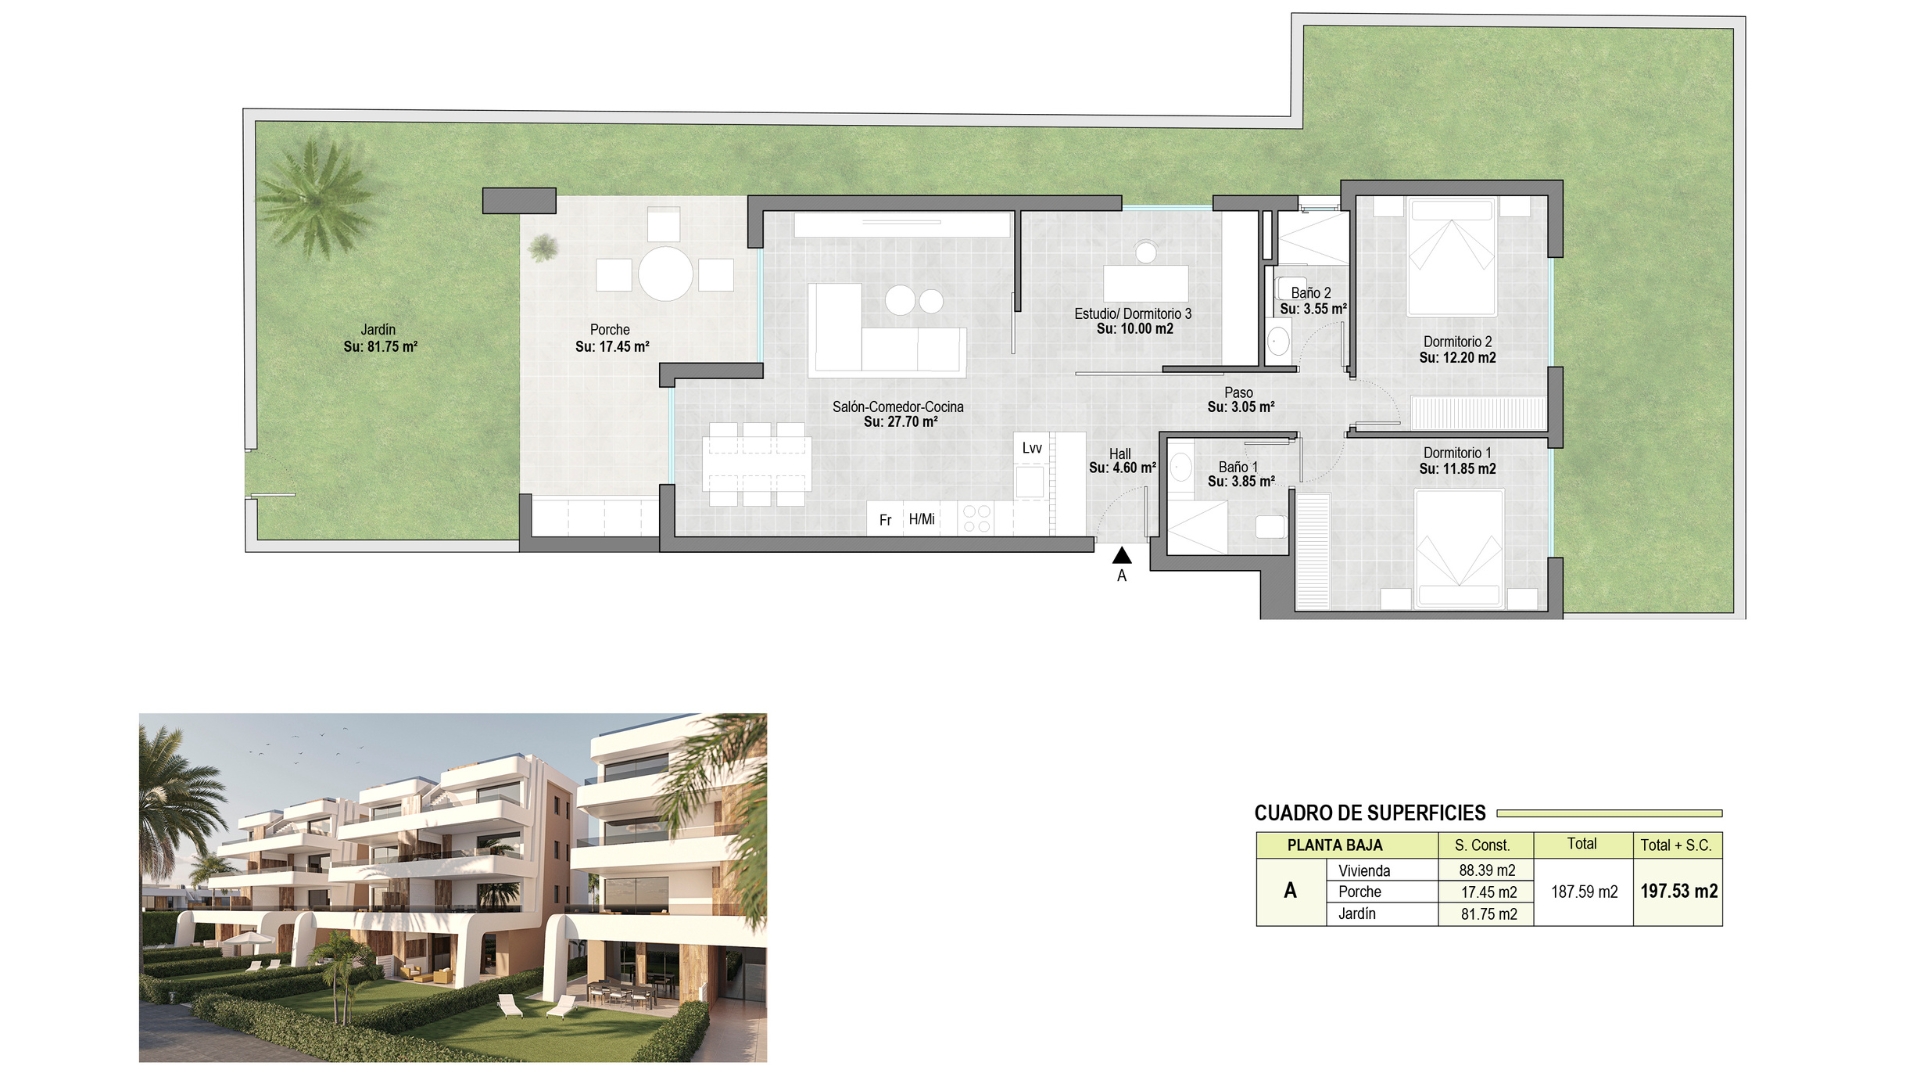 Floor plan for Apartment ref 3915 for sale in Condado De Alhama Spain - Quality Homes Costa Cálida